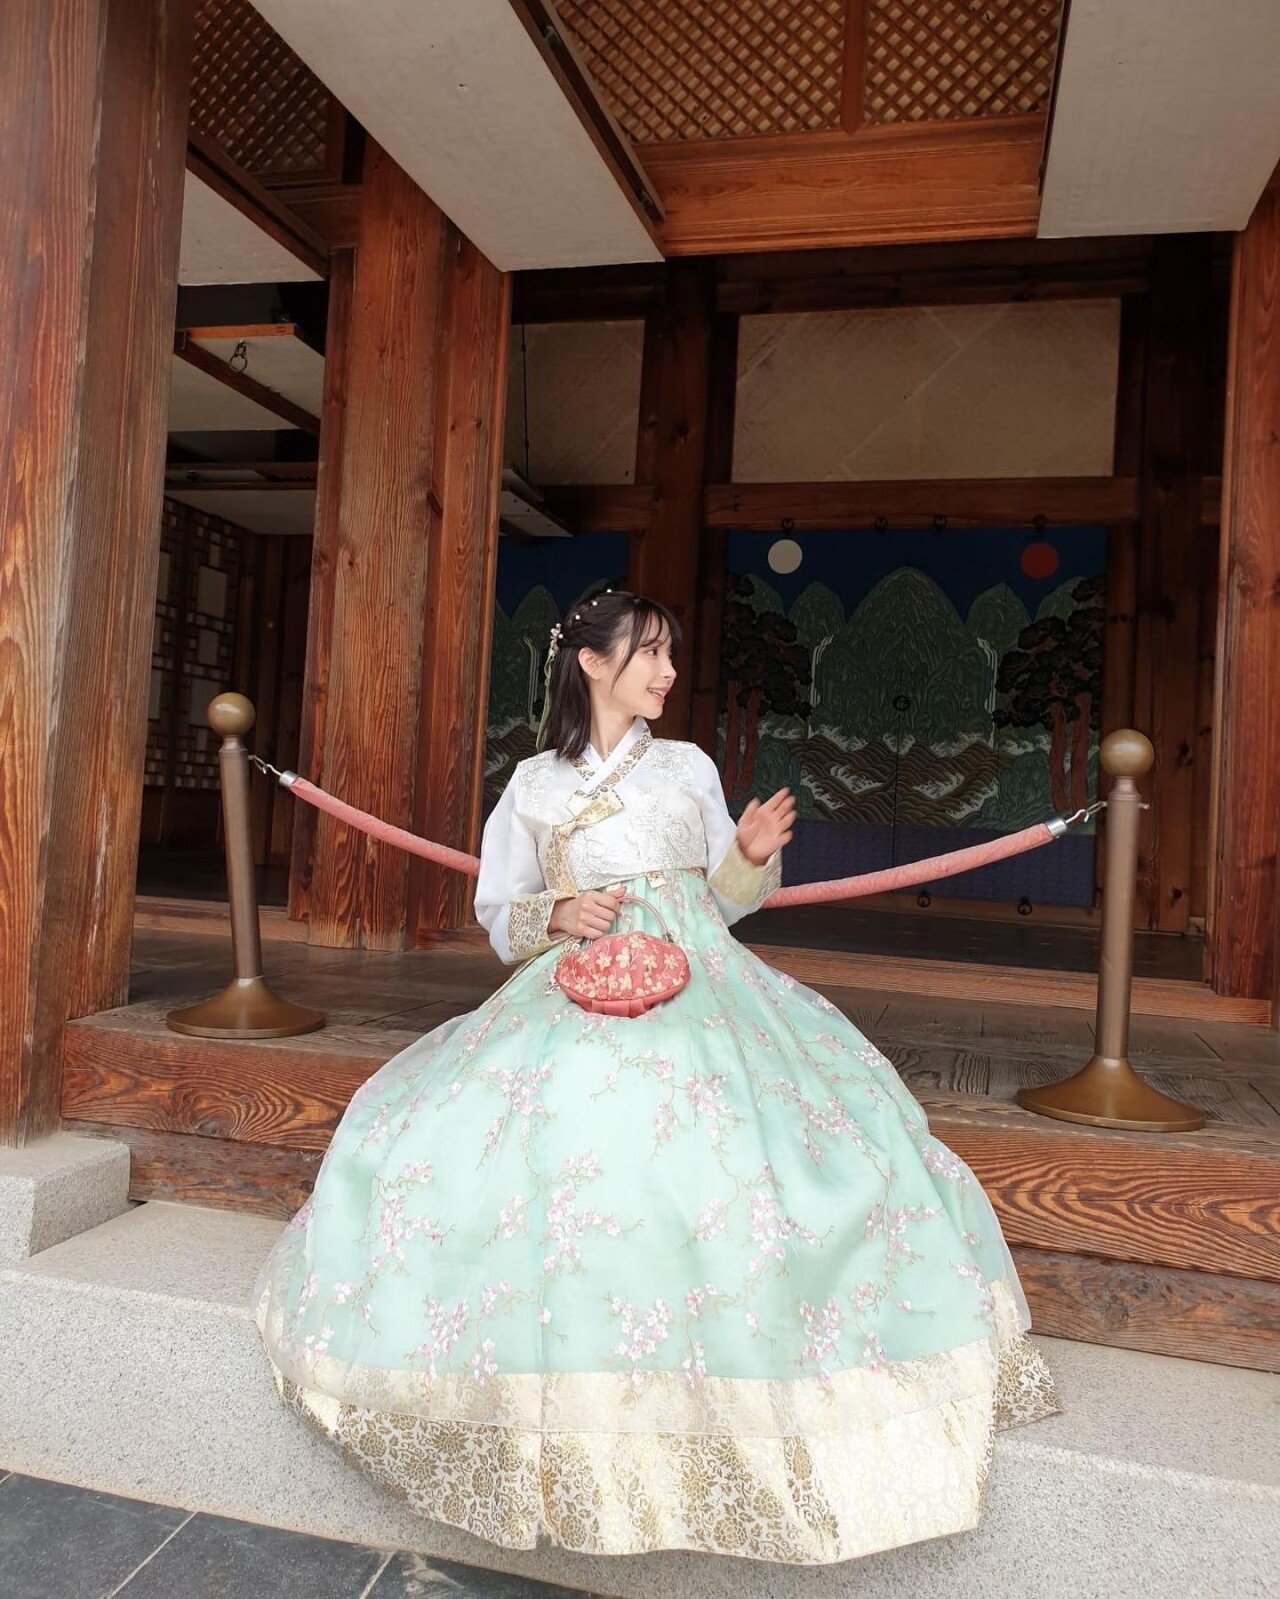 MOMONOGI KANA's update at Gyeongbokgung Palace